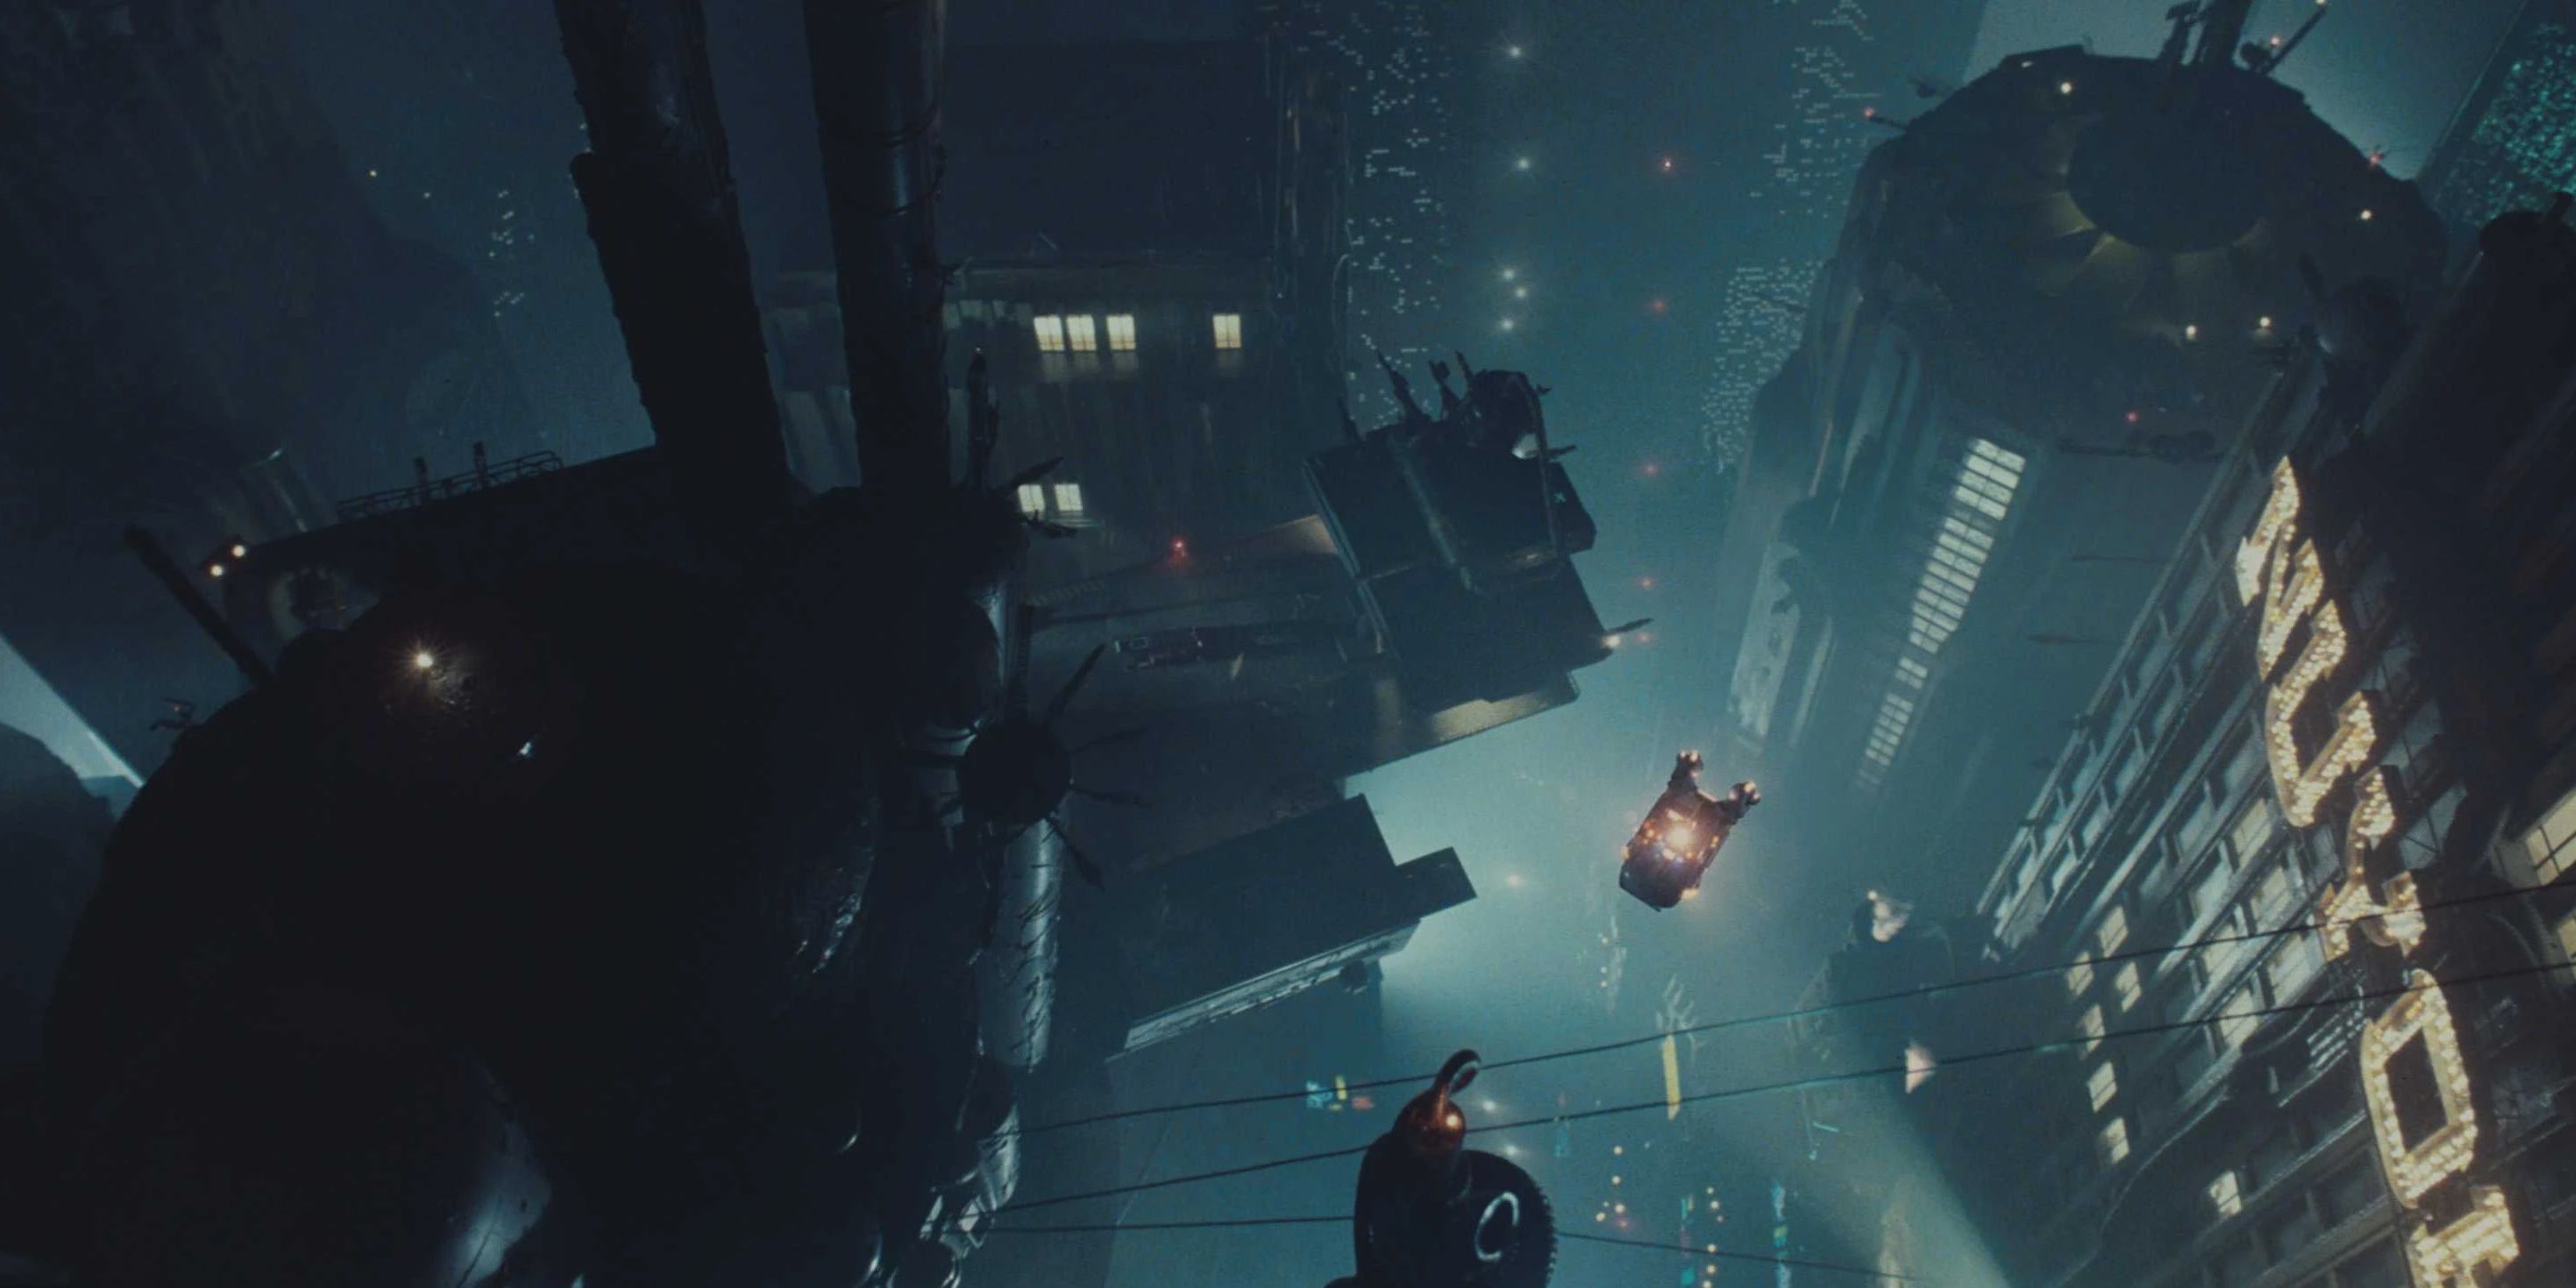 Futuristic LA depicted in Blade Runner